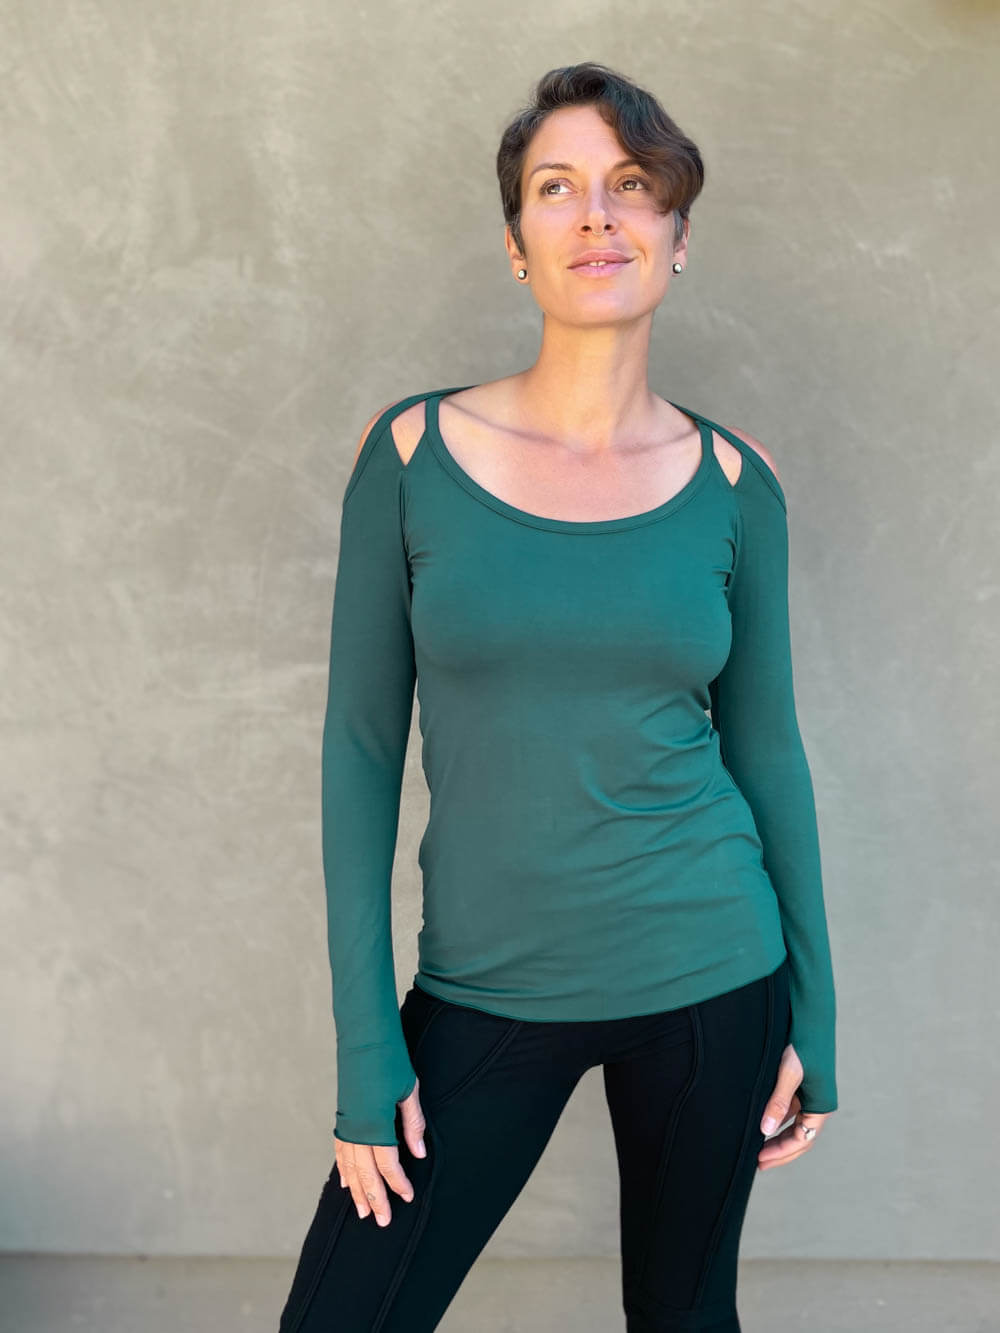 women's plant based stretchy rayon jersey long sleeve peekaboo shoulder jasper green top with thumbholes #color_jasper